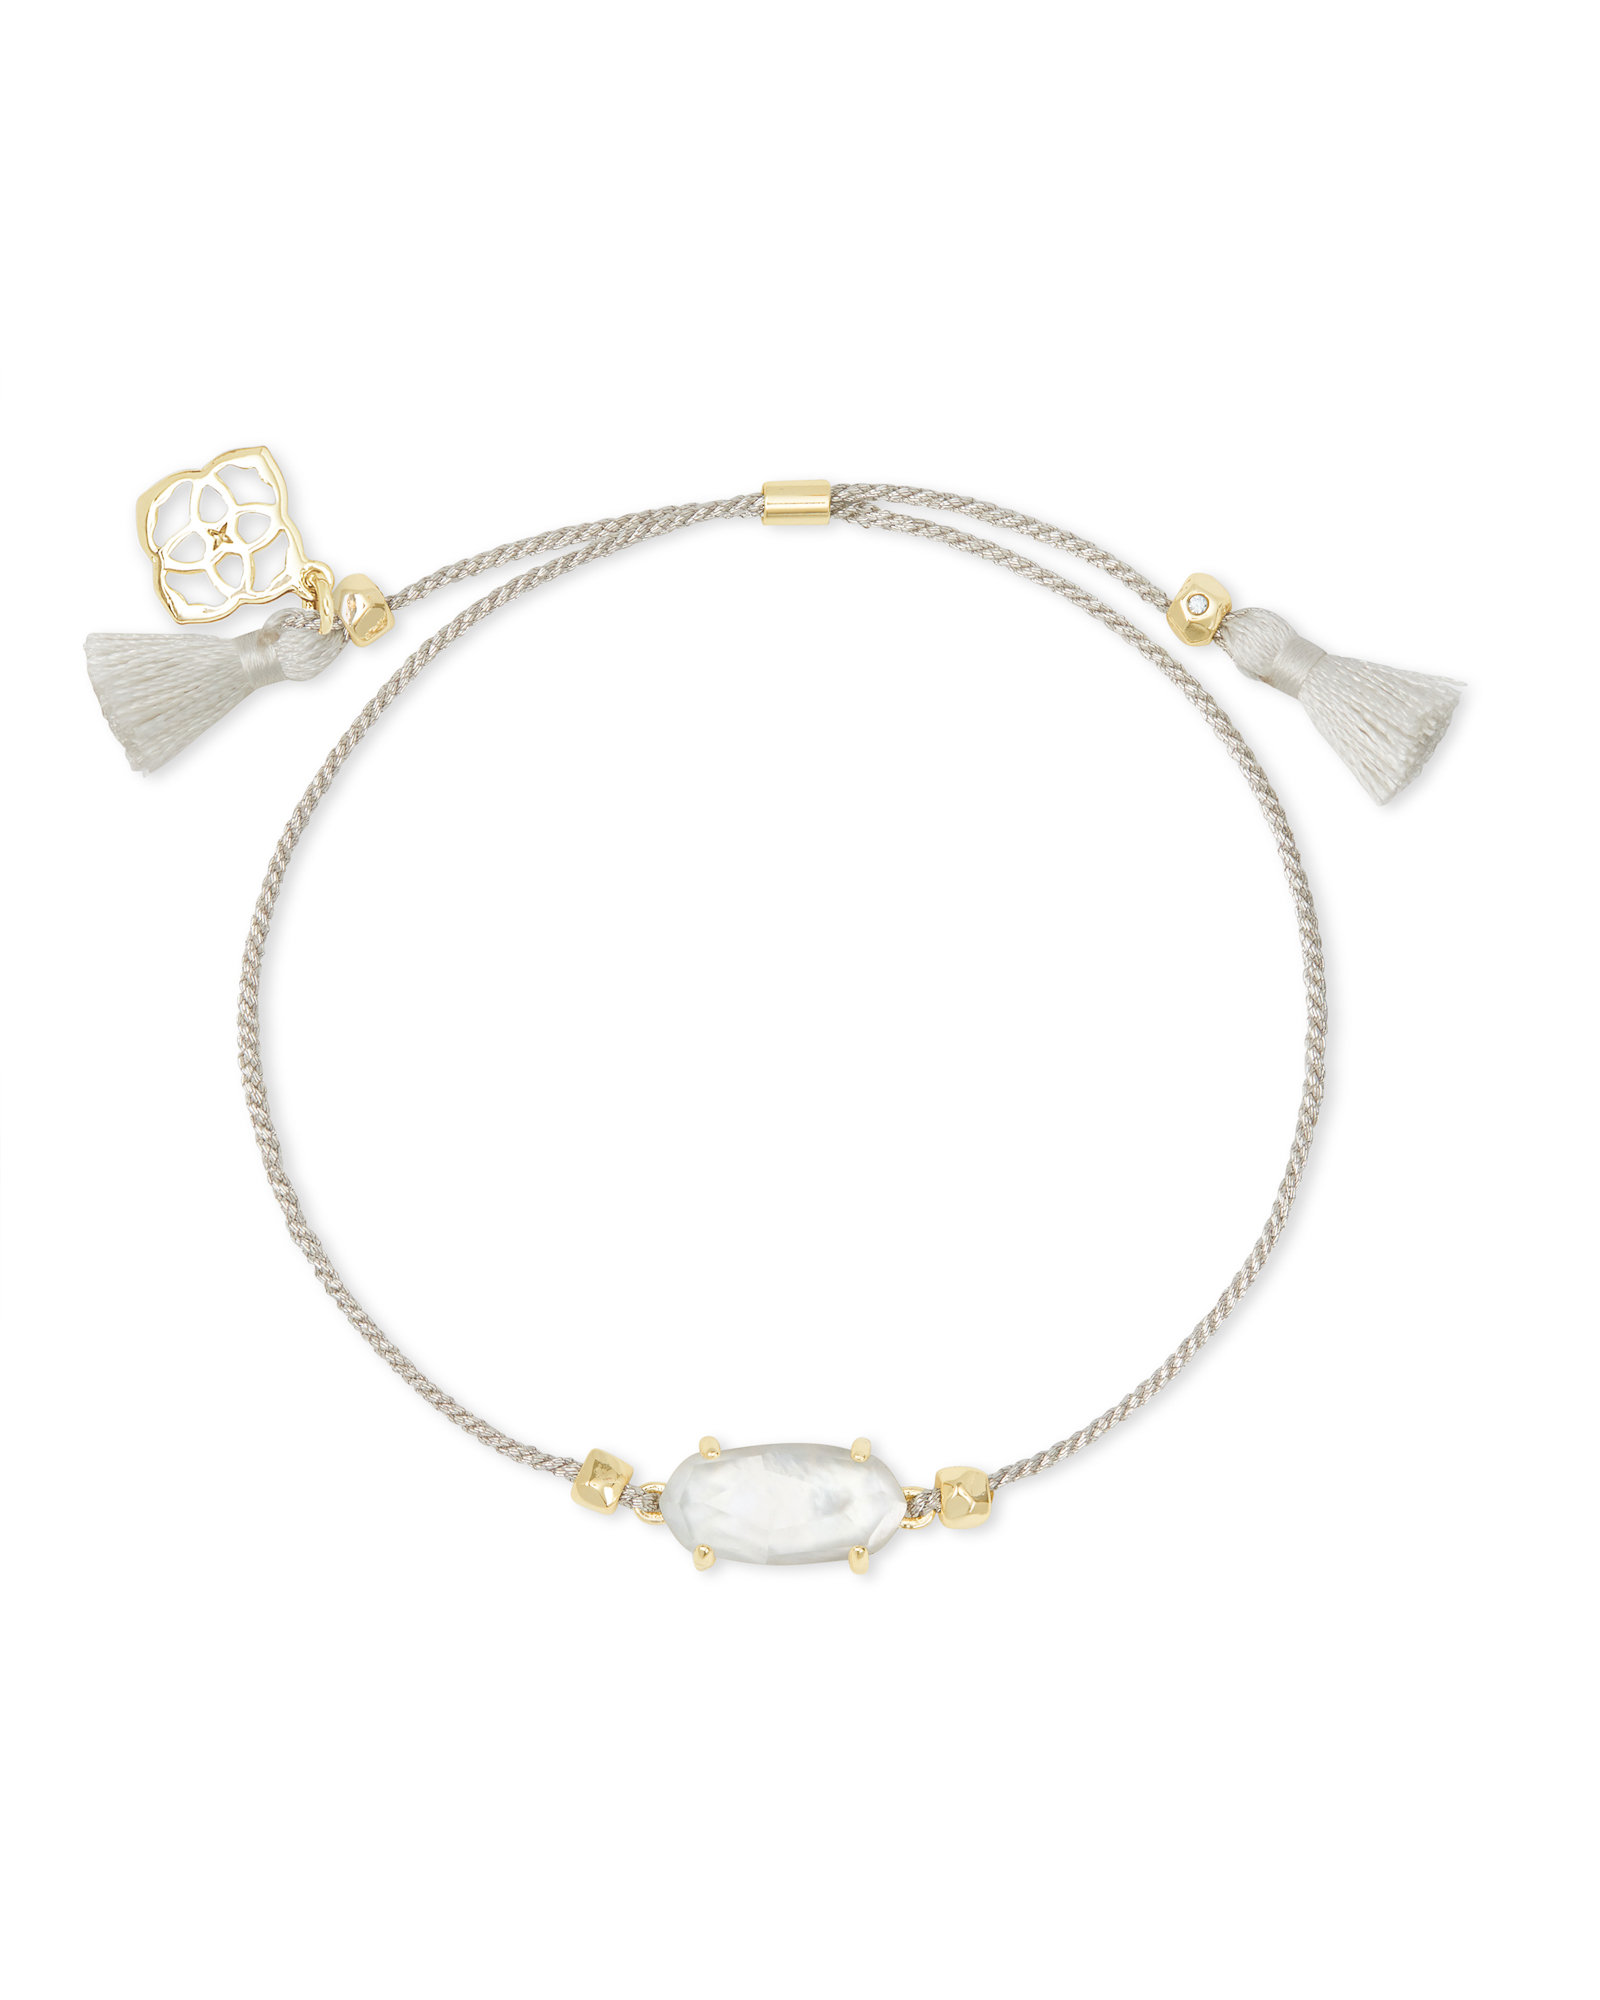 Ivory and gold kendra scott bracelet